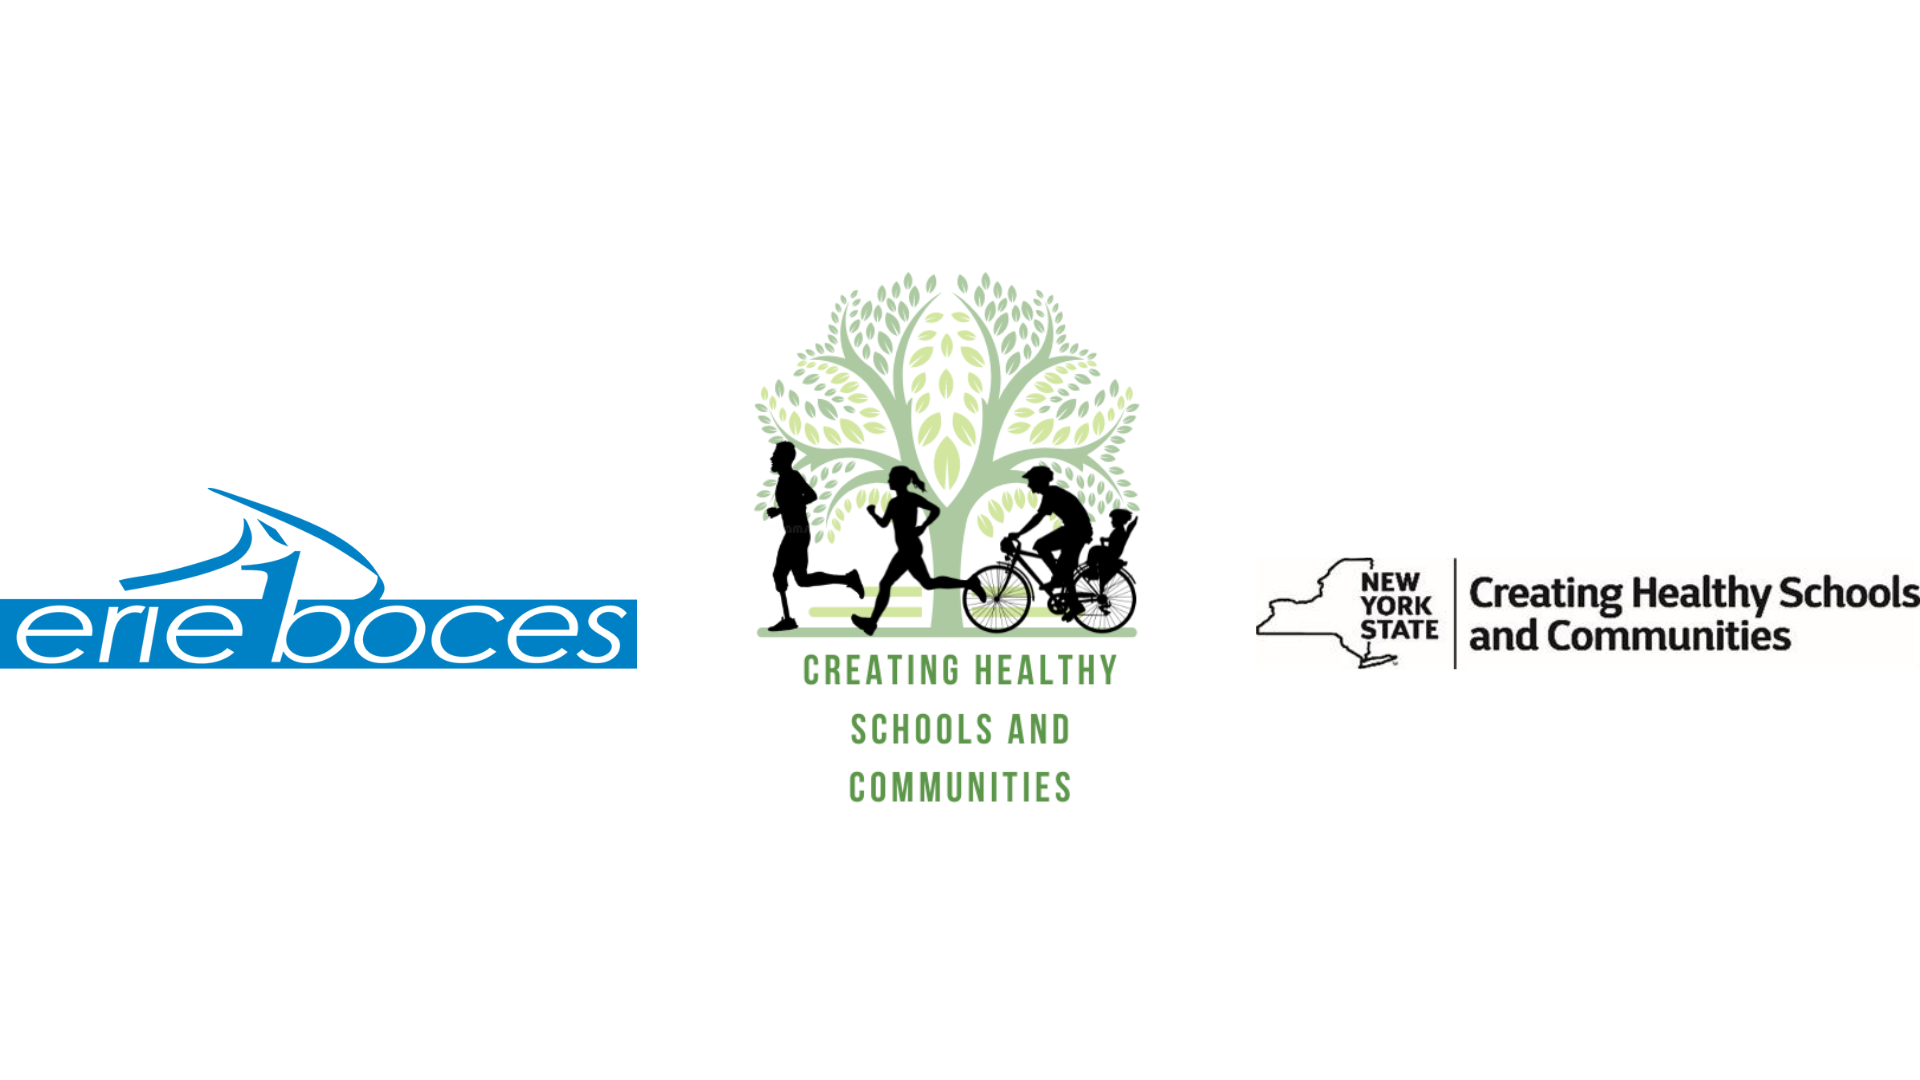 Creating Healthy Schools and Communities logos